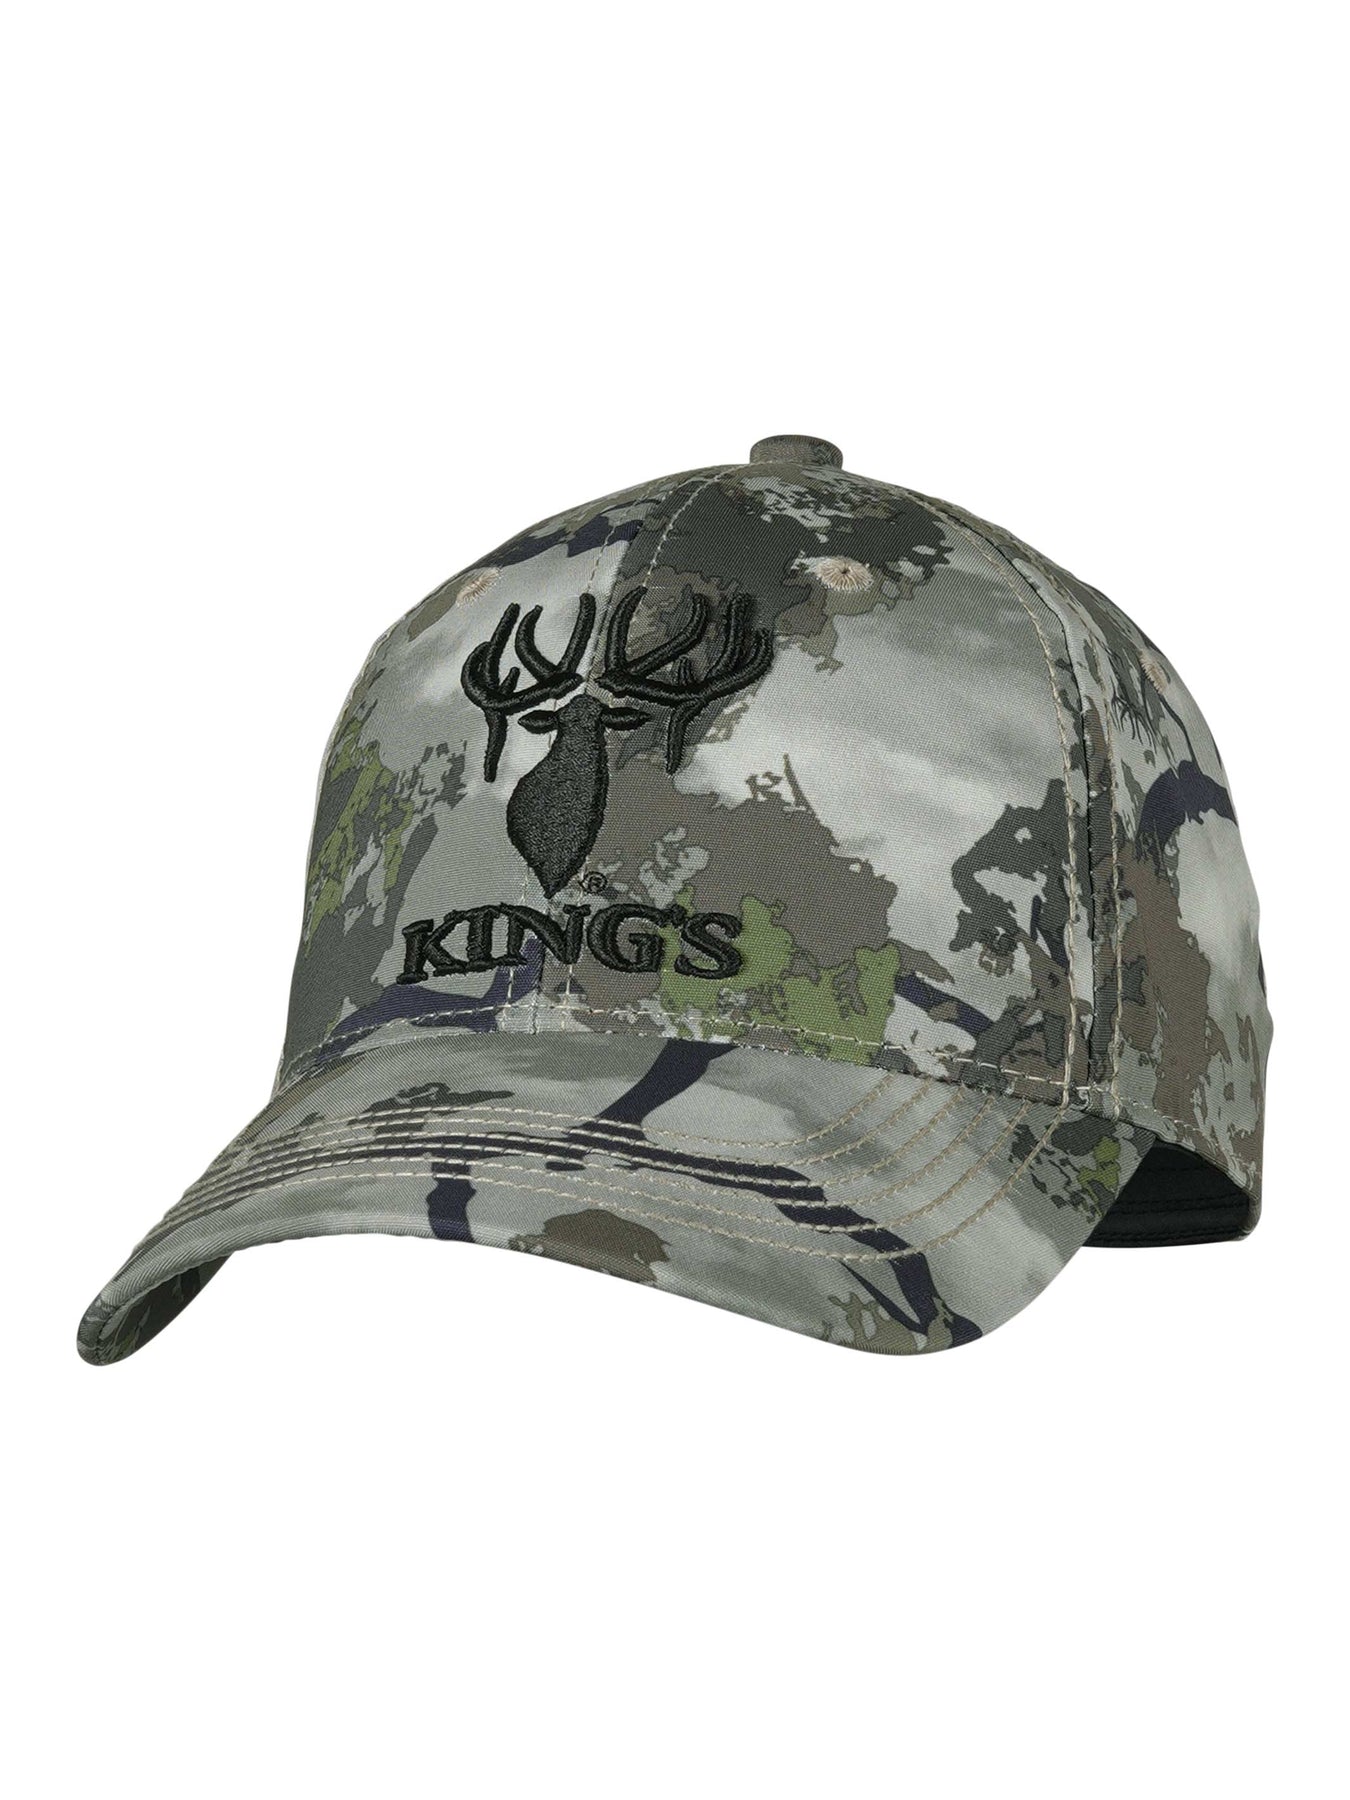 Buy Hunting Hats for Men - Adult Baseball Cap Camoued, Camo Deer